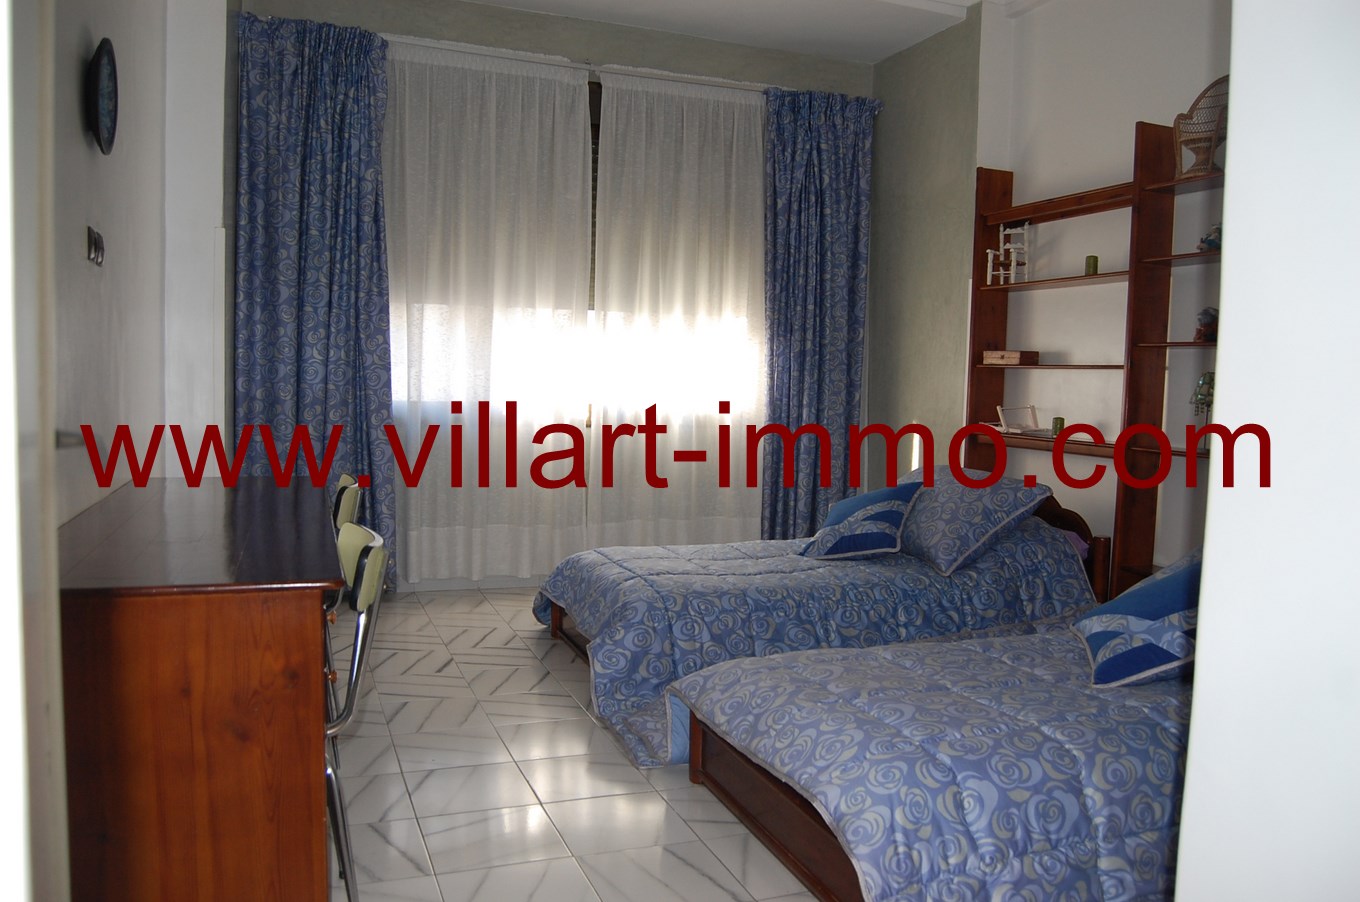 7-Location-Appartement-meublé-Tanger-chambre 1-L673-Villart-immo